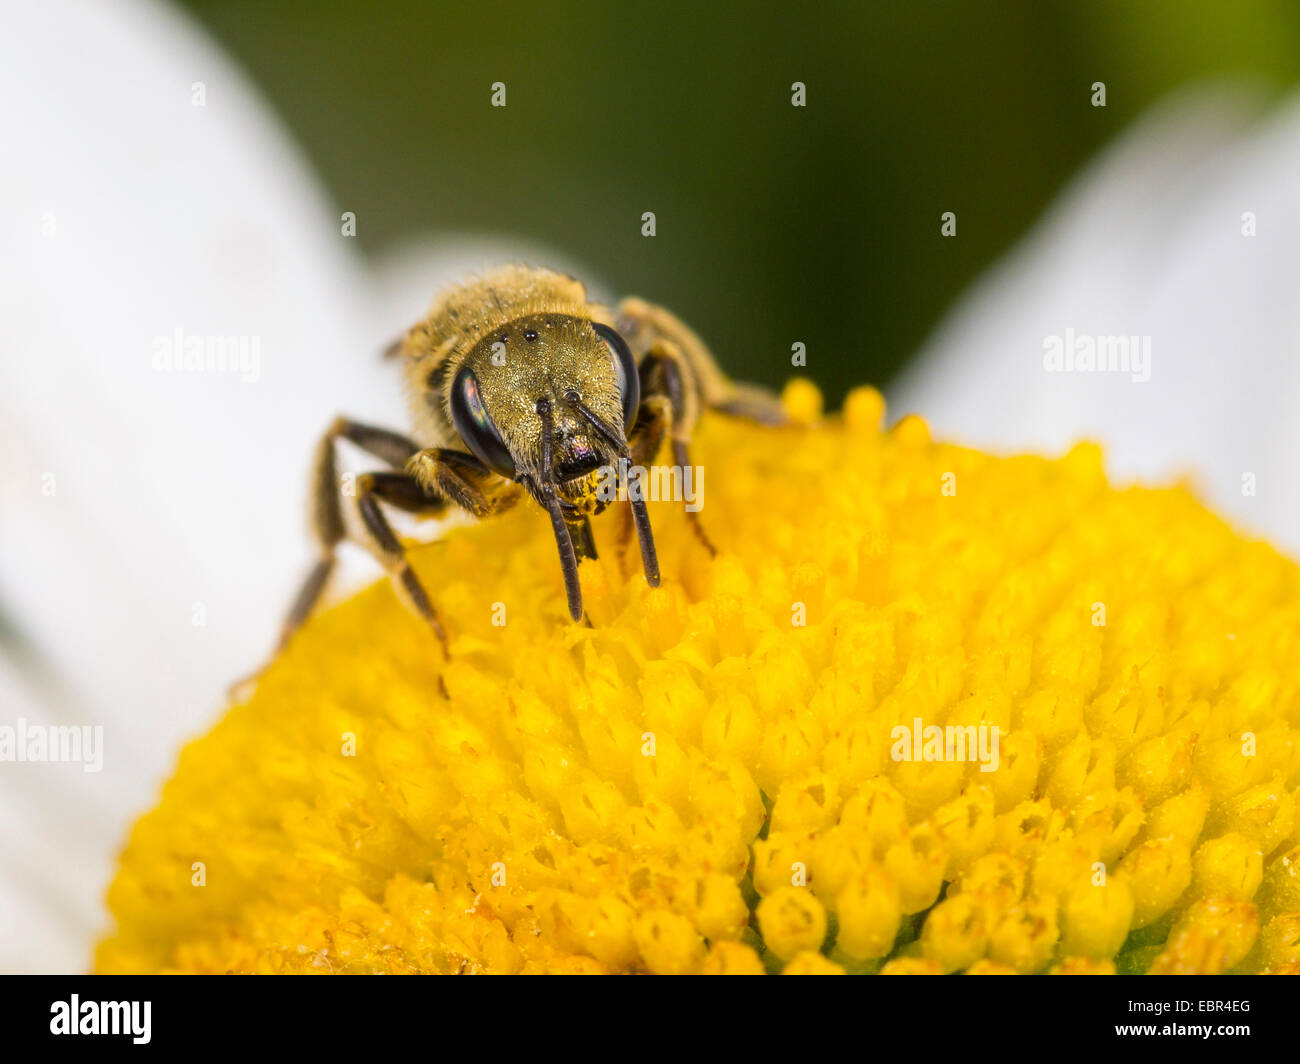 Sweat bee (Halictus confusus), female foraging foraging on oy-eye daisy (Leucanthemum vulgare), Germany Stock Photo